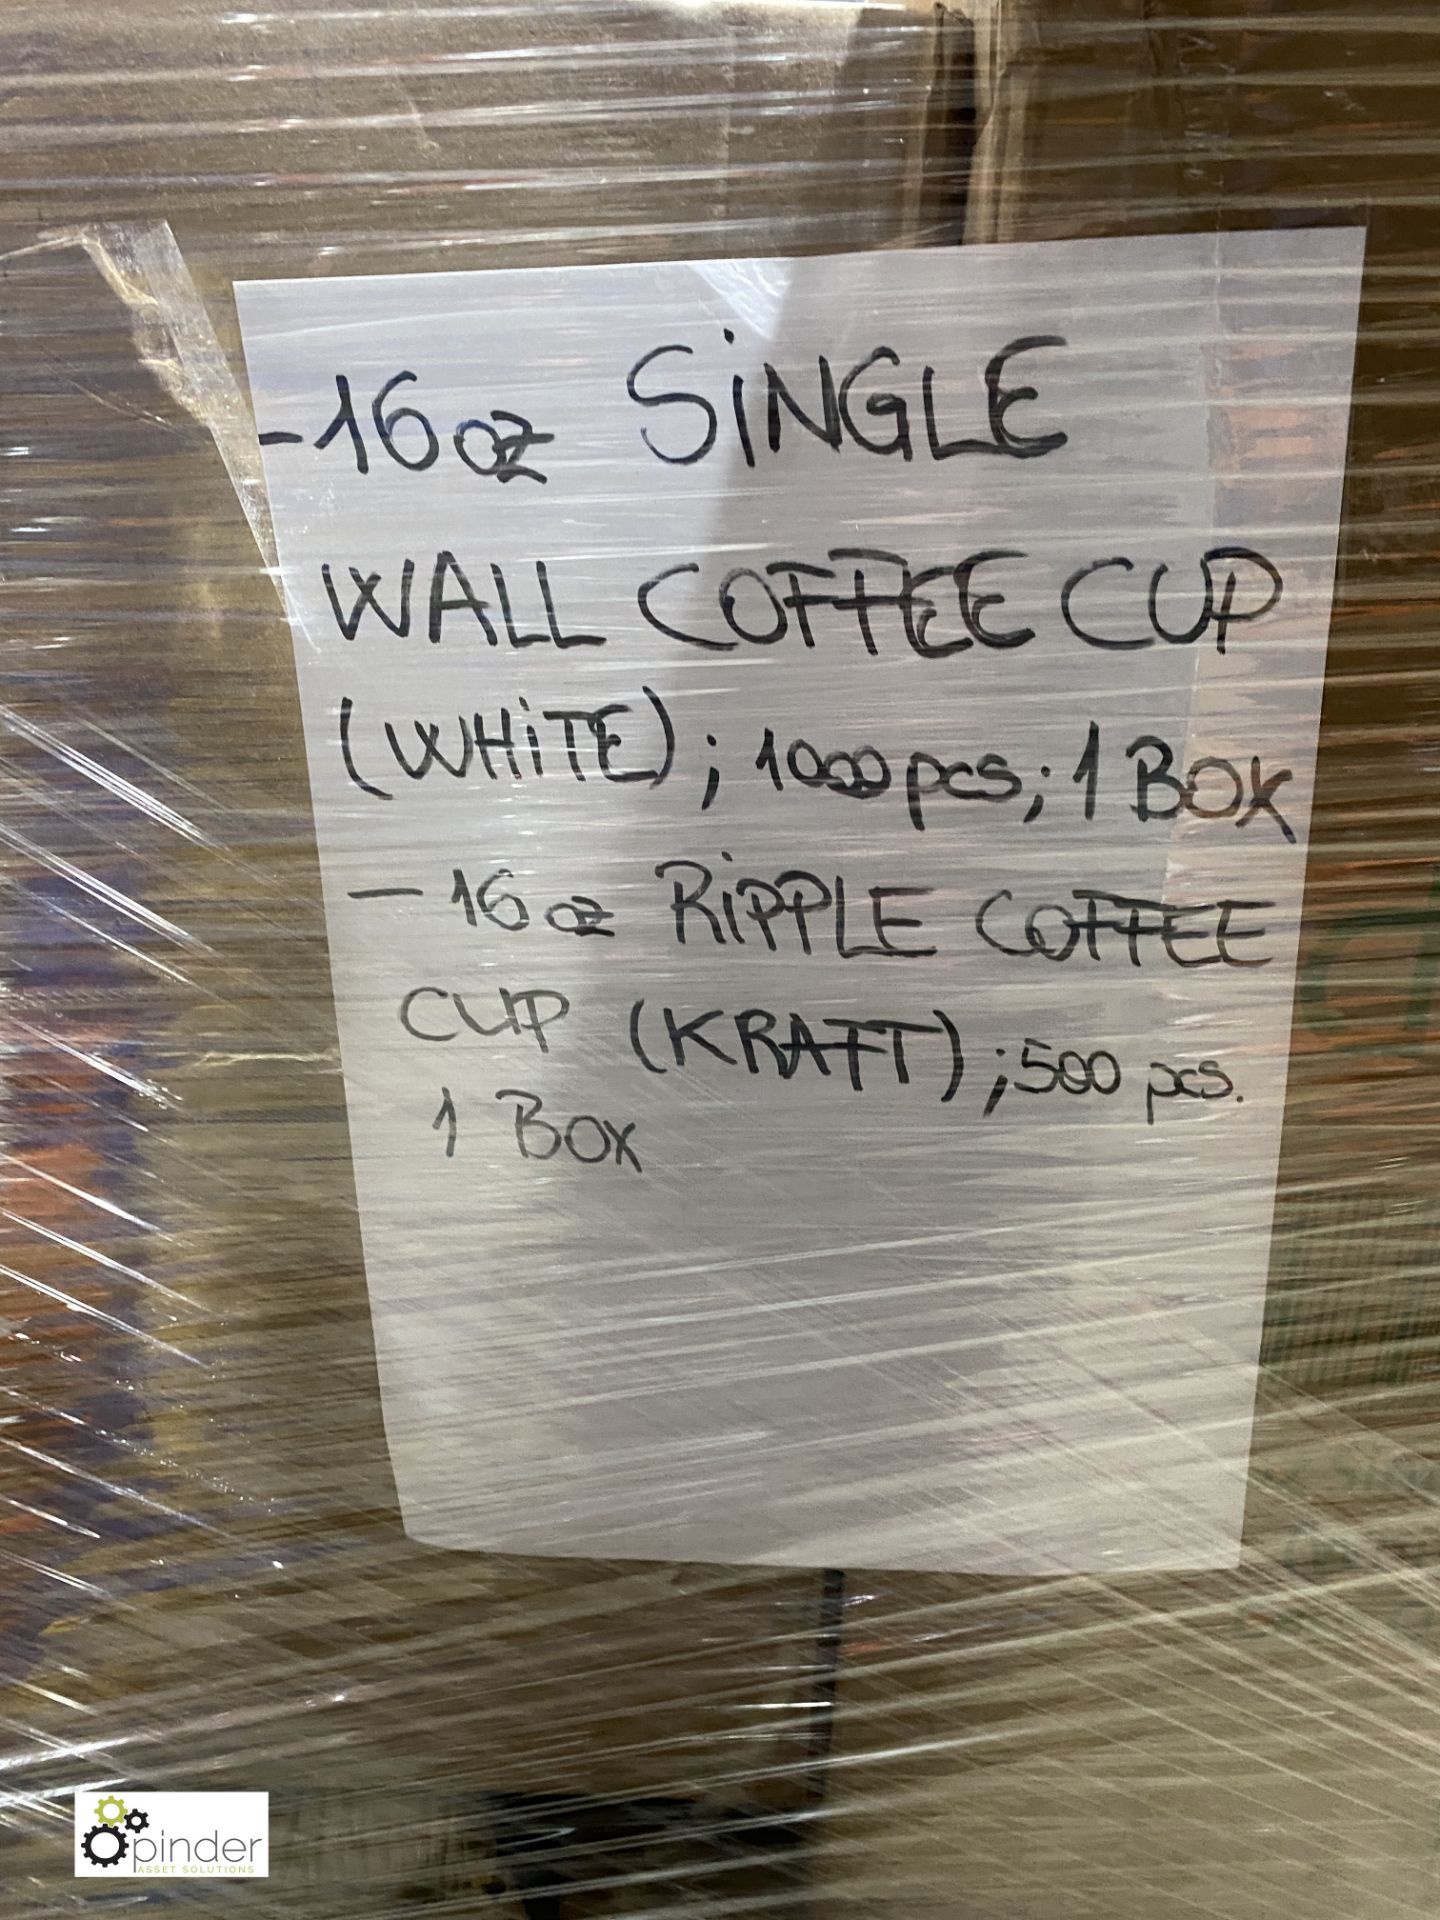 1 box 8oz single wall Coffee Cup, white, 1000 per box; 4 boxes 12oz tall Ripple Coffee Cups, - Image 8 of 9